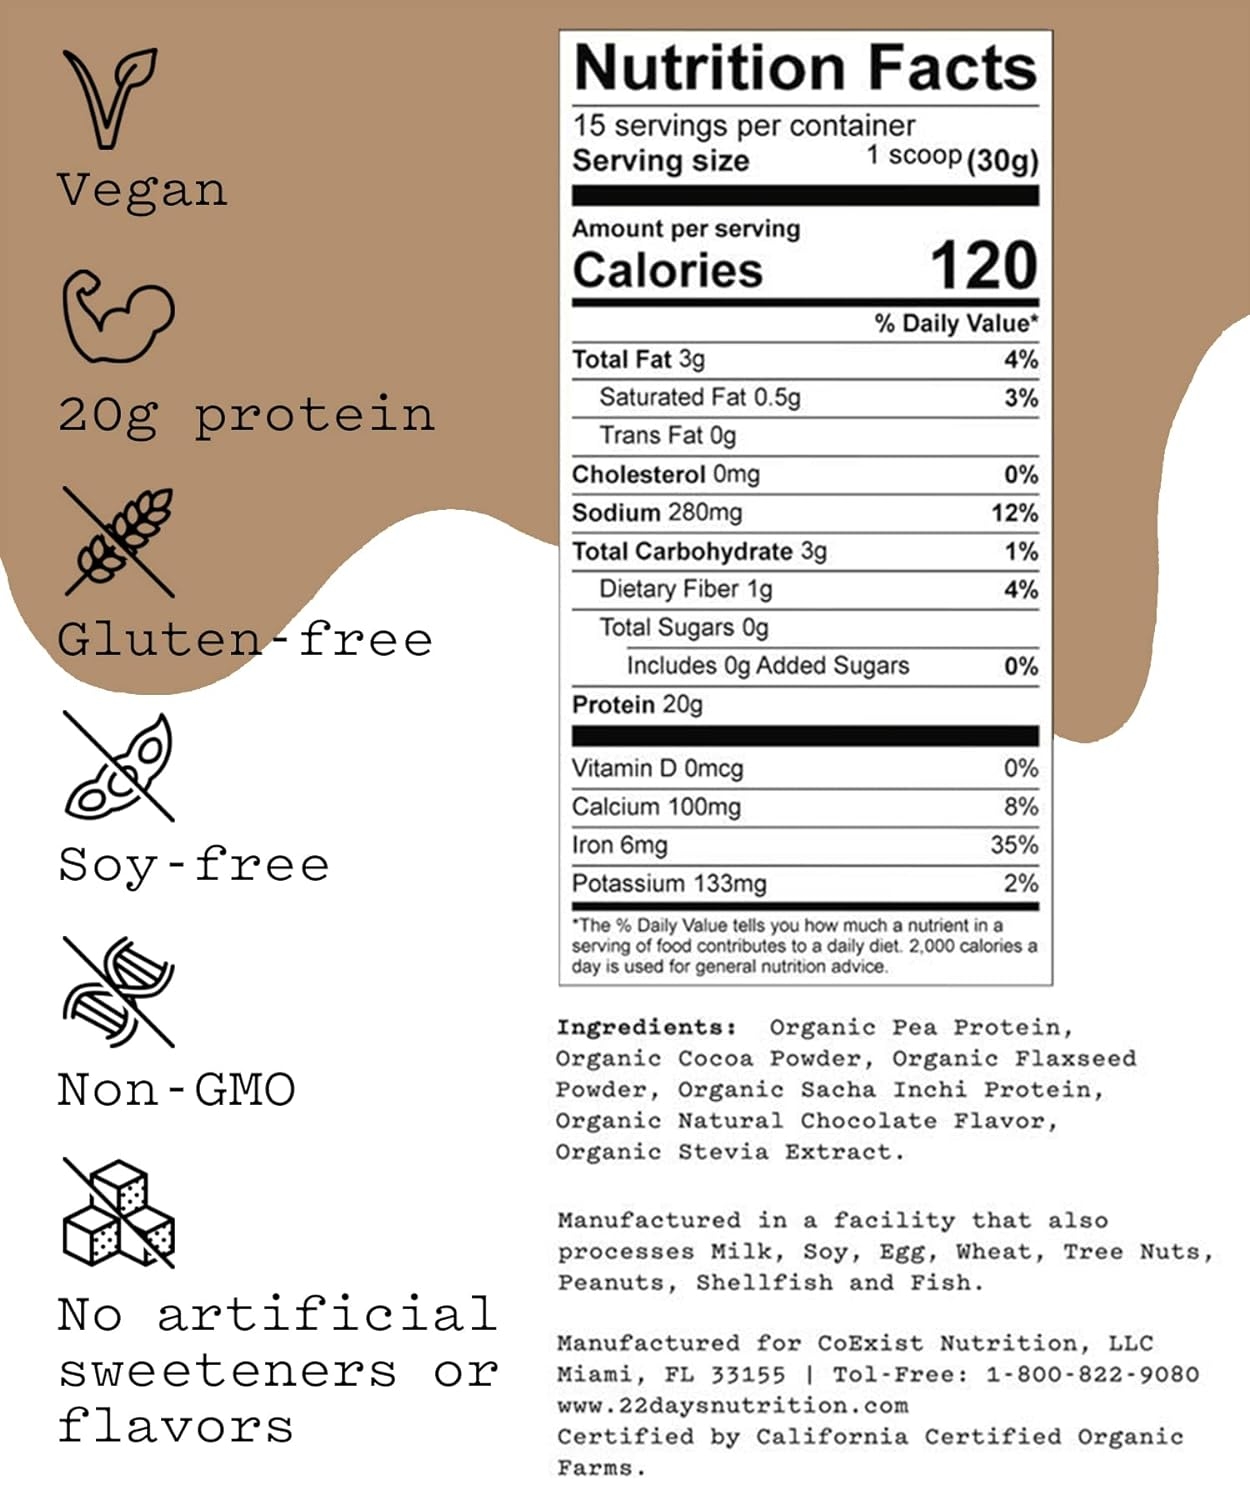 22 Days Nutrition Organic Protein Powder, Chocolate, 15 Serving | Delicious, Gluten Free, Vegan, Pea, Flax, and Sacha Inchi Plant Based Protein Powder (20g)